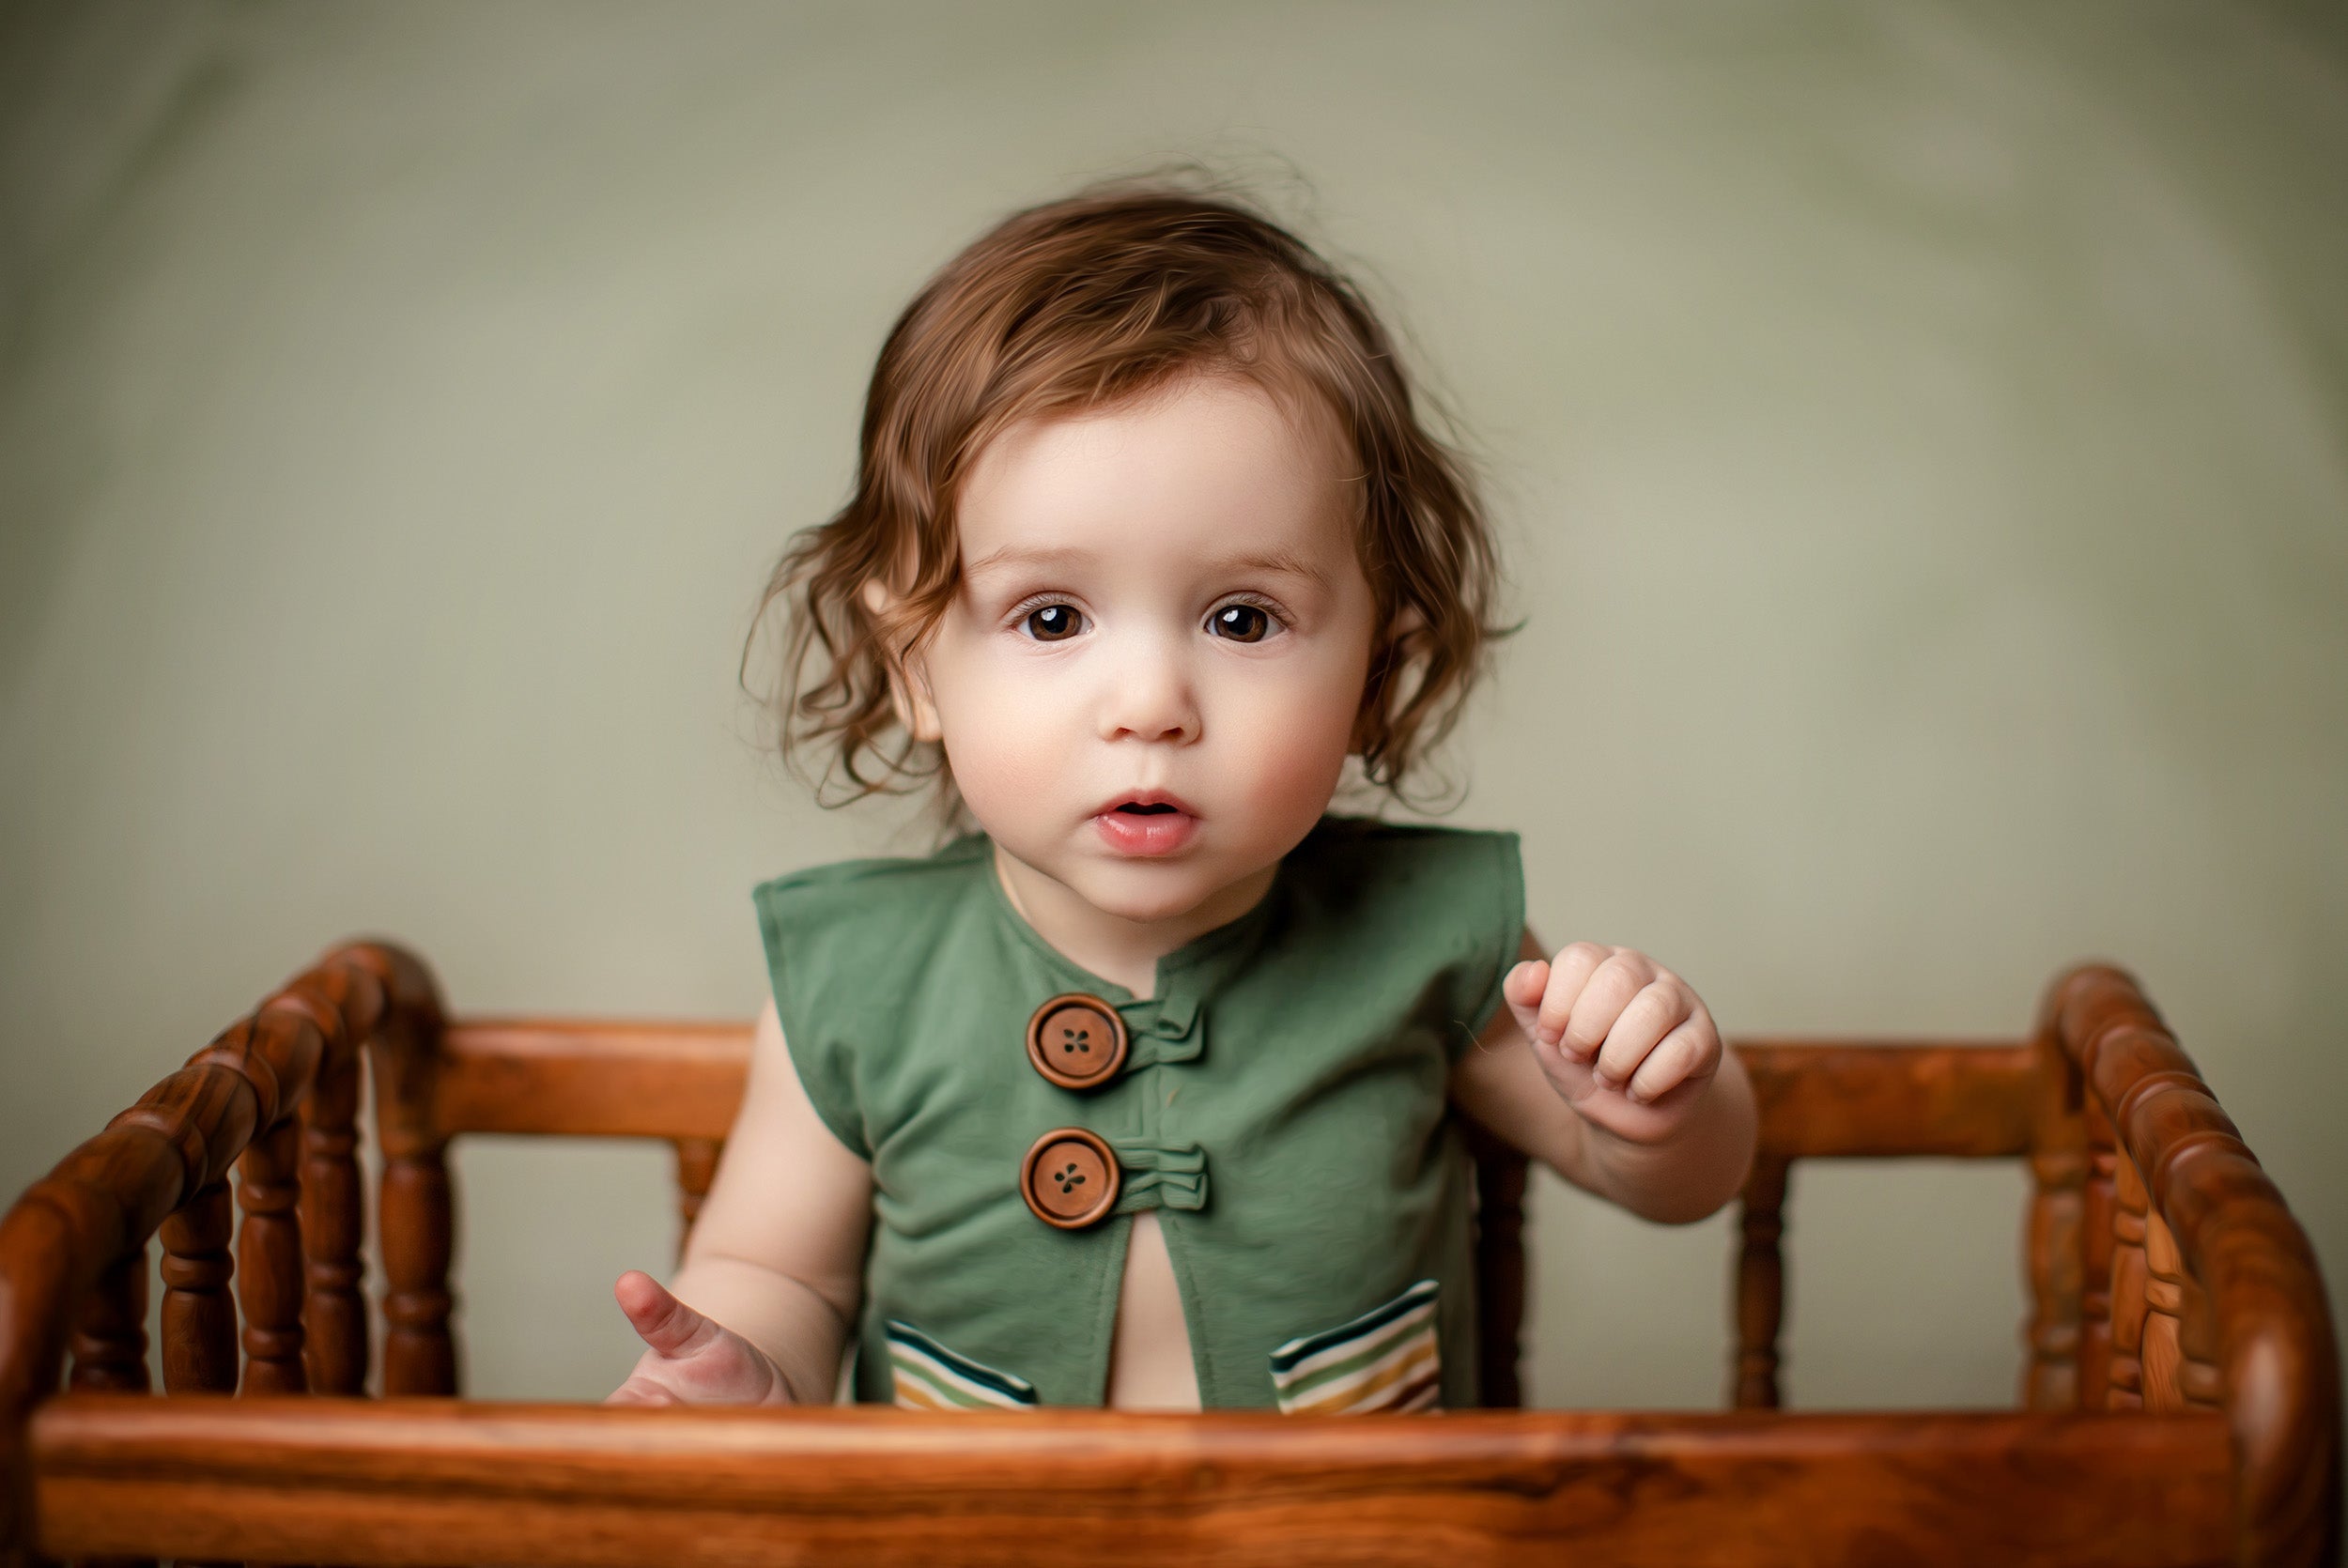 Syler Newborn or Sitter  (6-9 month) Vest & Pants Set- Green w/ Modern Rainbow- MADE TO ORDER